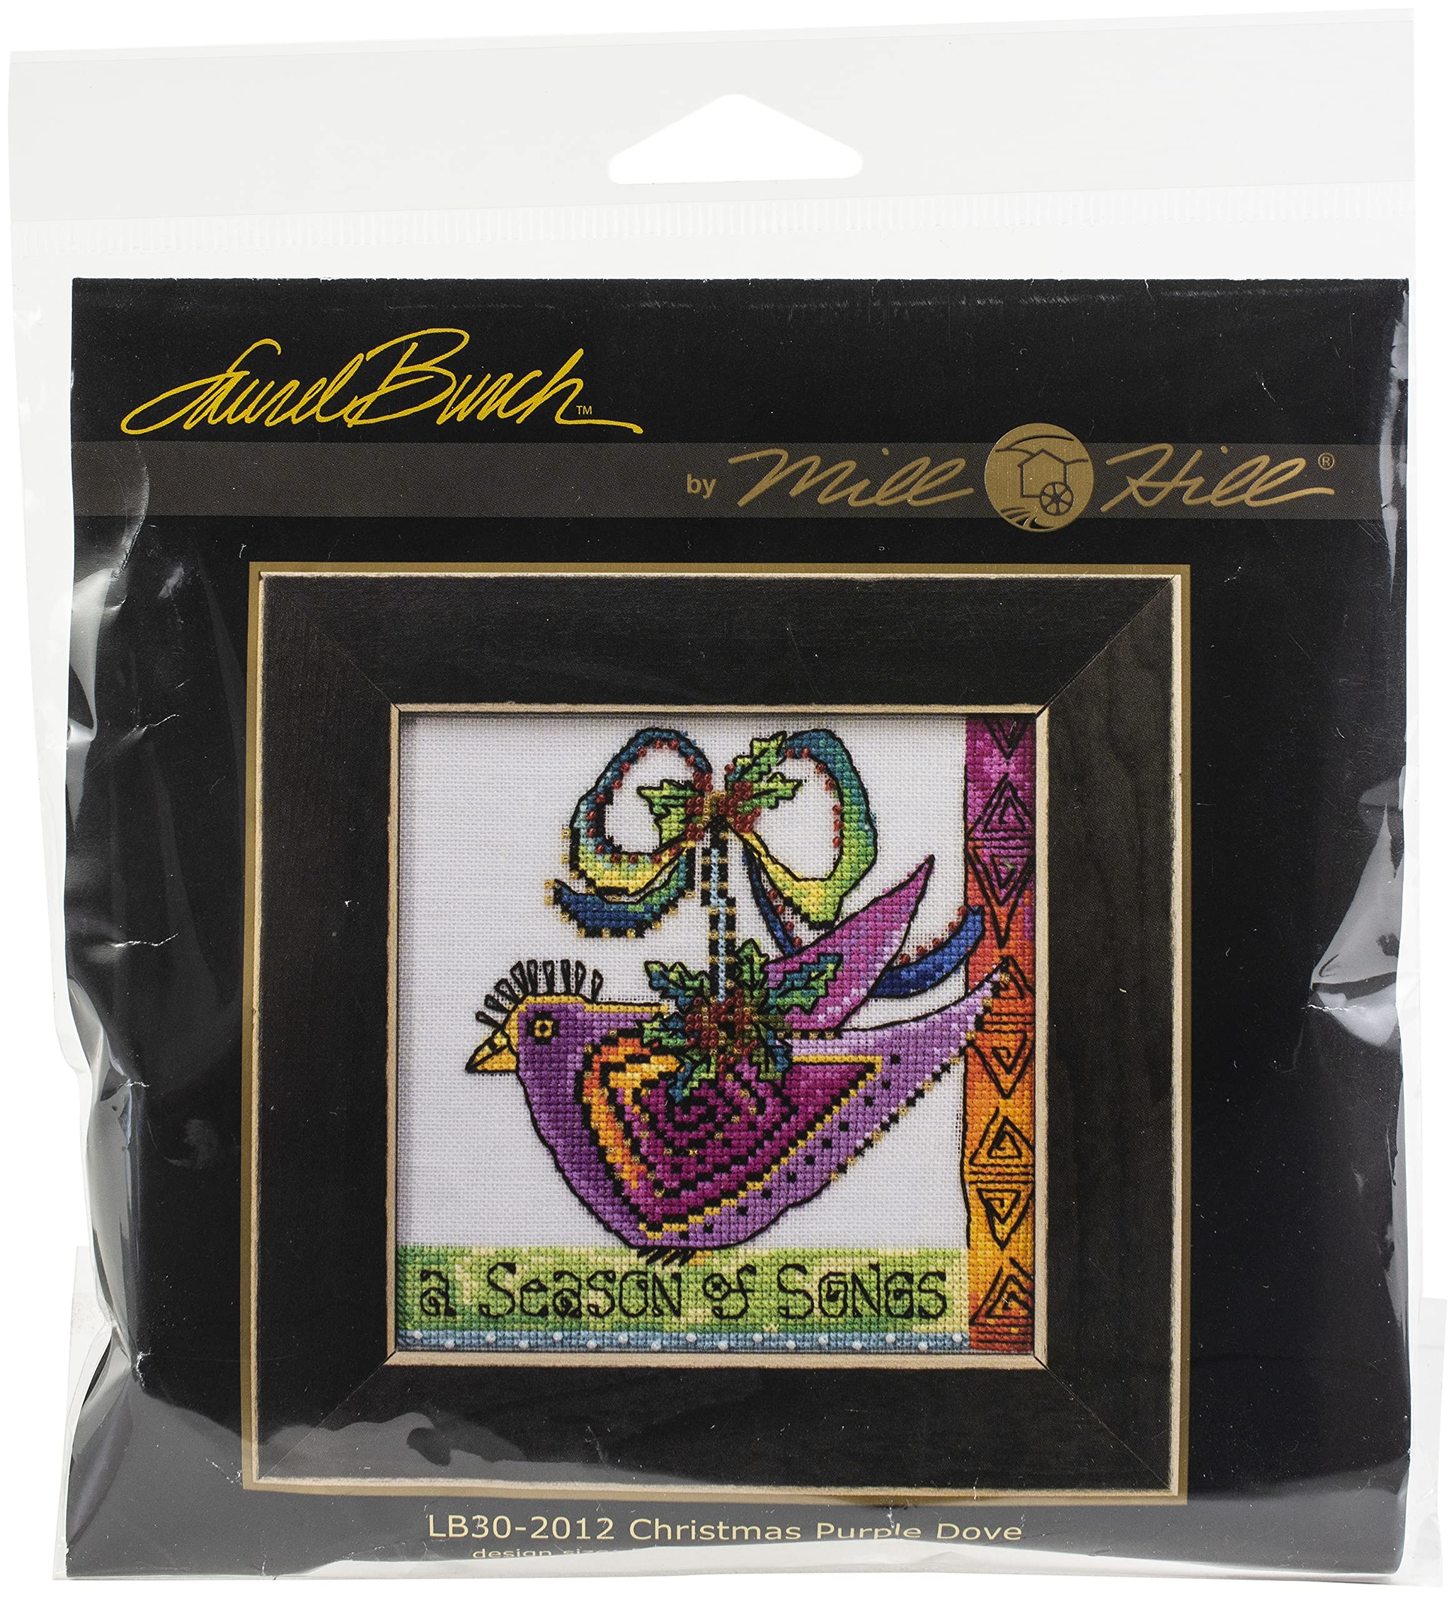 Christmas Purple Dove Beaded Counted Cross Stitch Kit Mill Hill 2020 Laurel Burc - $15.99